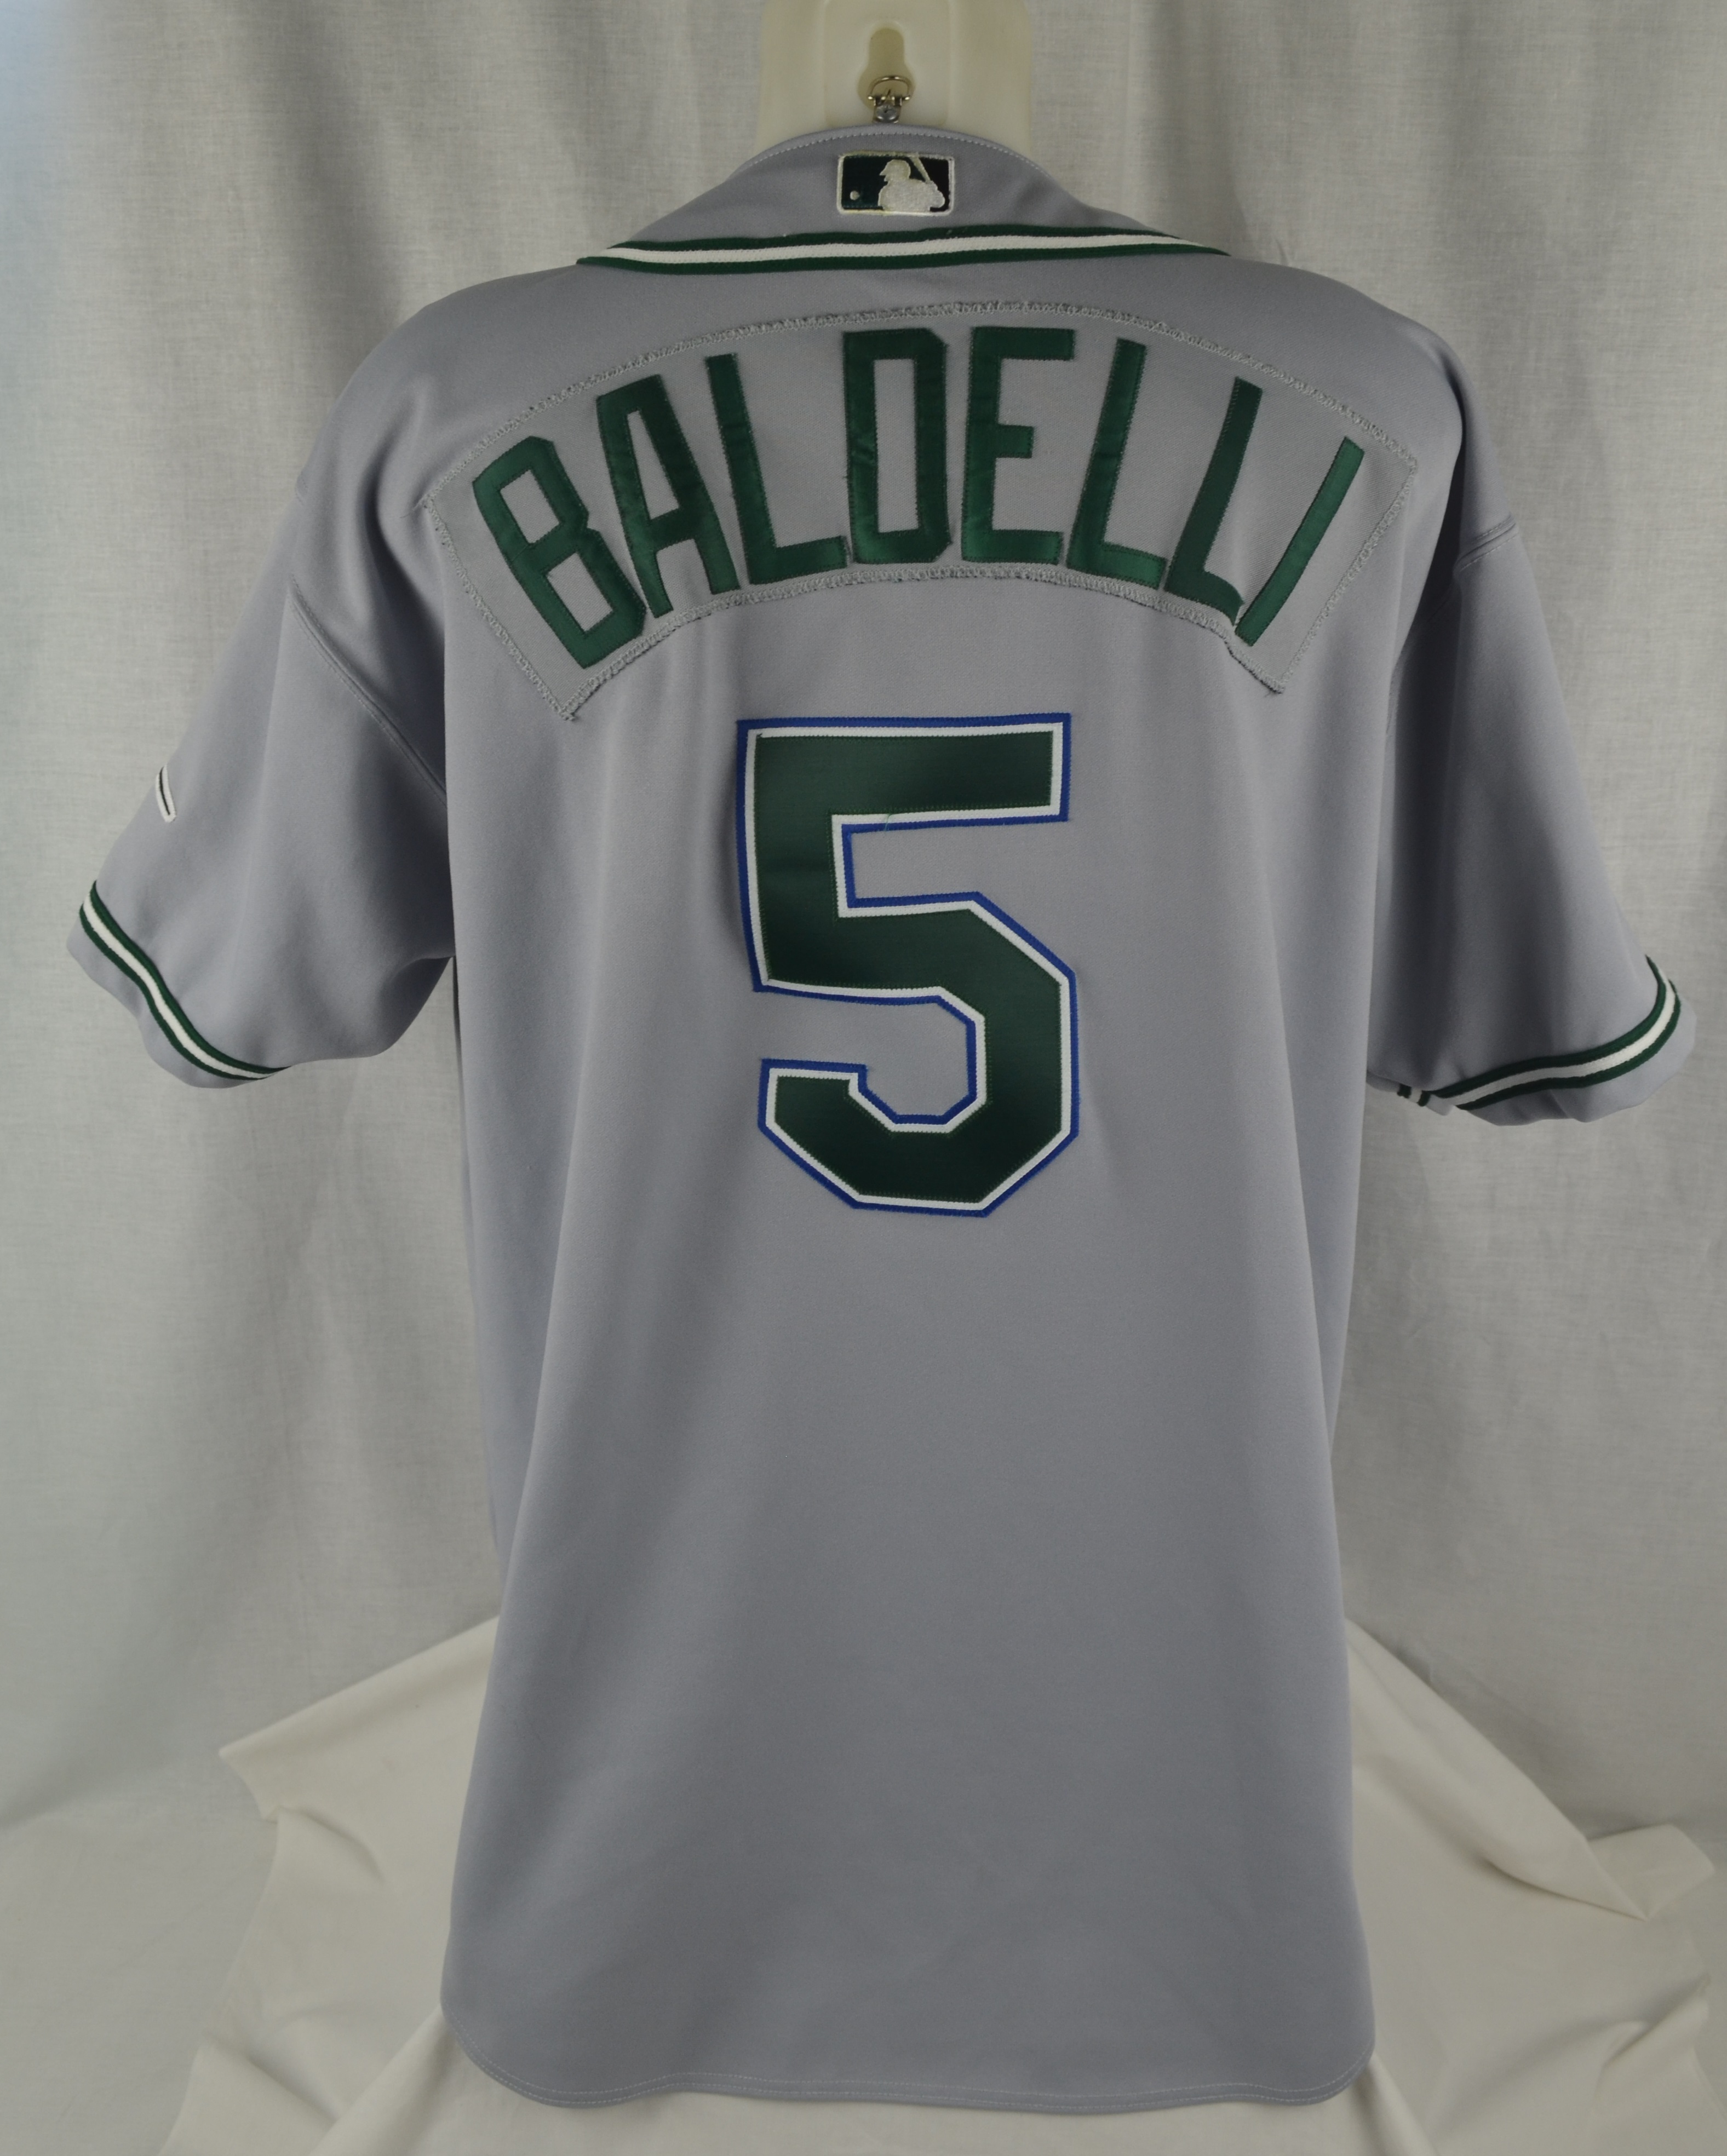 2003 Majestic Rocco Baldelli TAMPA BAY DEVIL RAYS 5 Stitched MLB